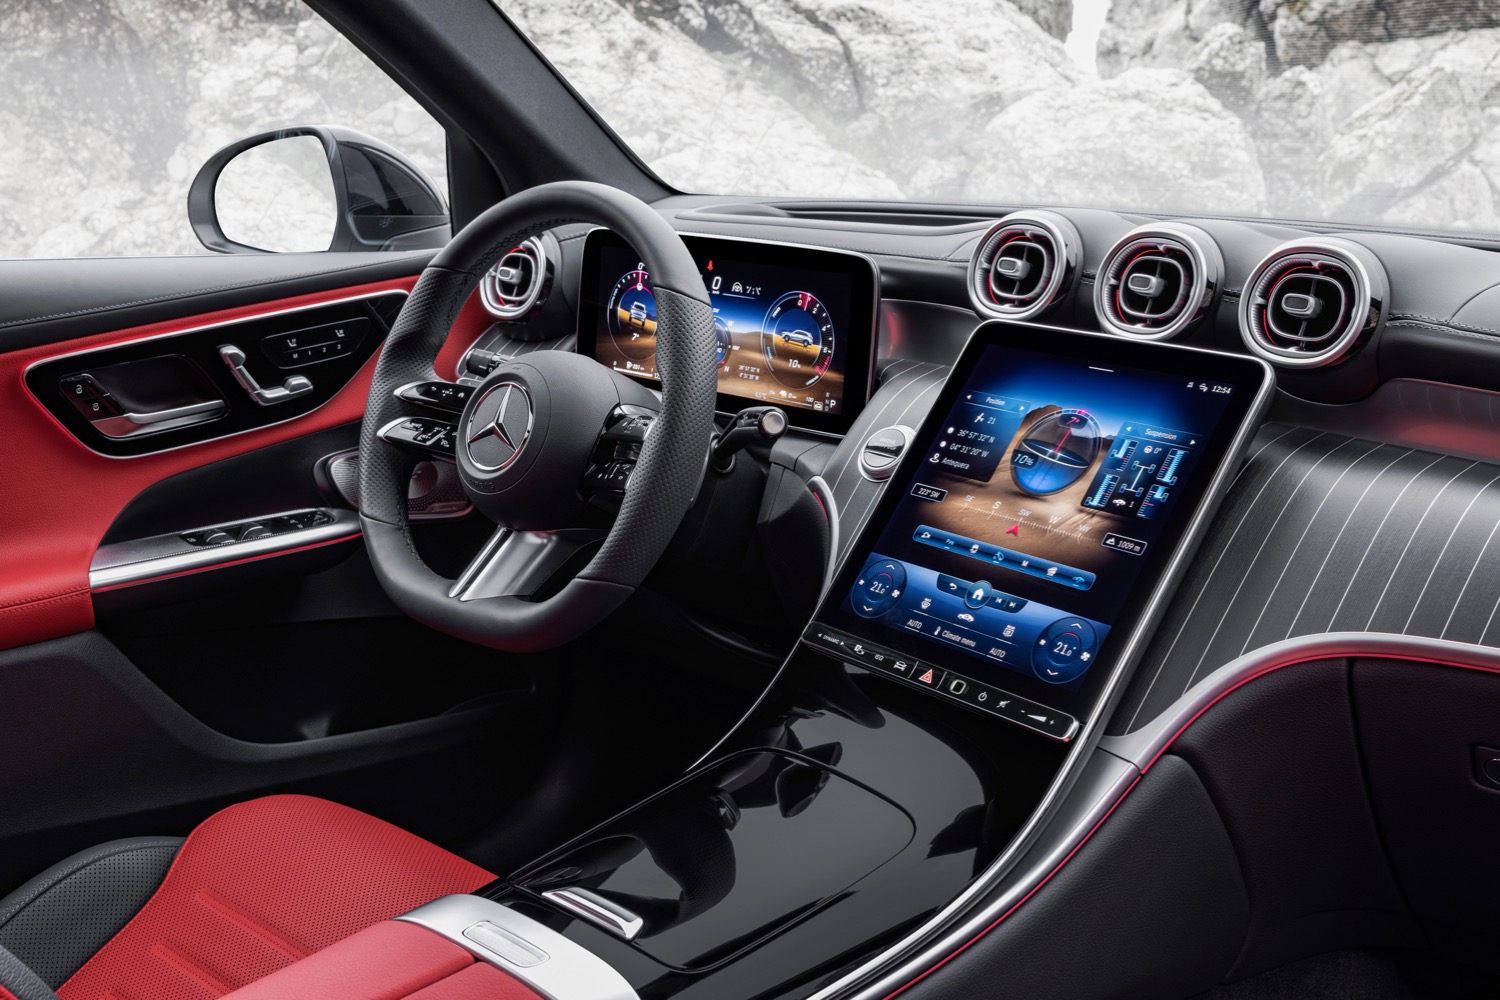 https://www.digitaltrends.com/wp-content/uploads/2022/06/2023-Mercedes-Benz-GLC-interior.jpg?fit=1500%2C1000&p=1